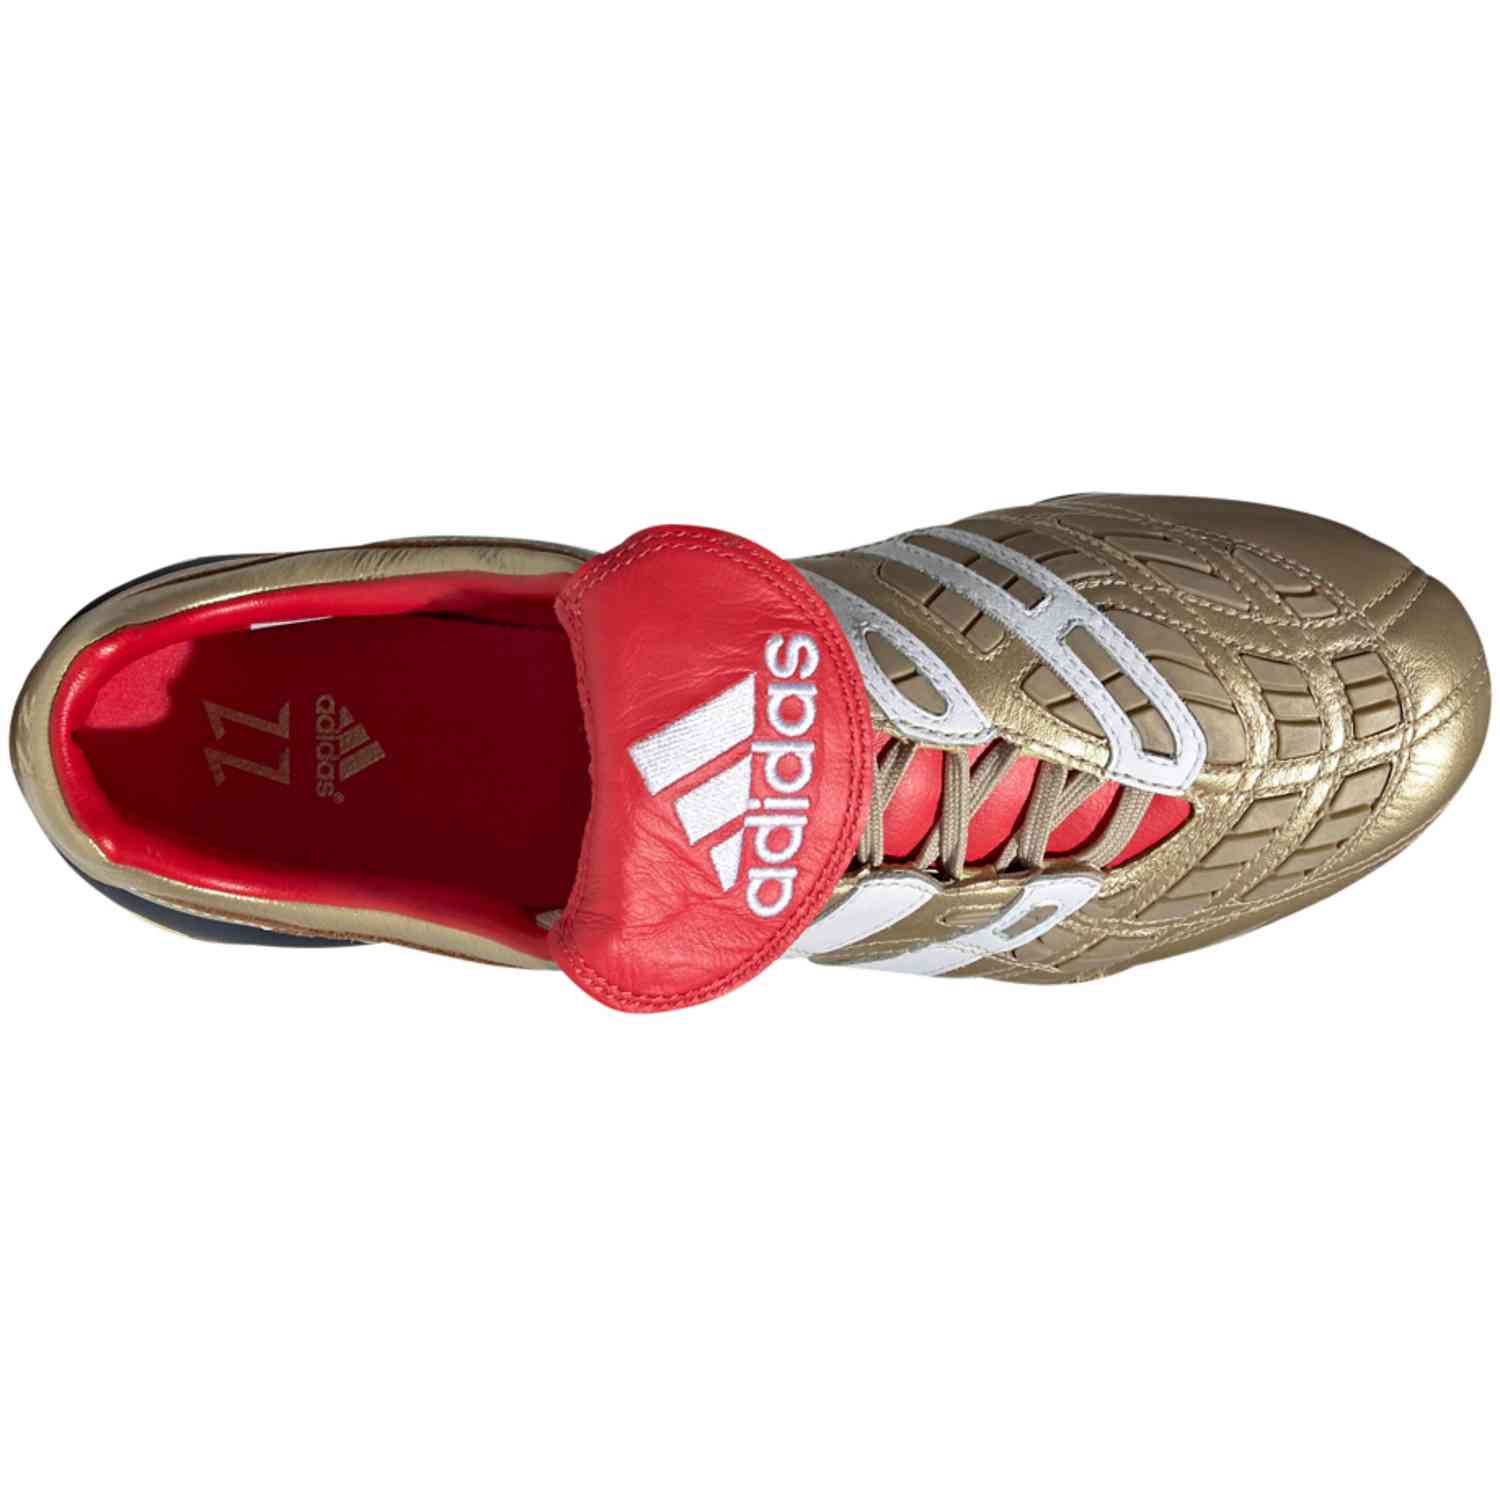 adidas predator accelerator fg zz soccer cleats